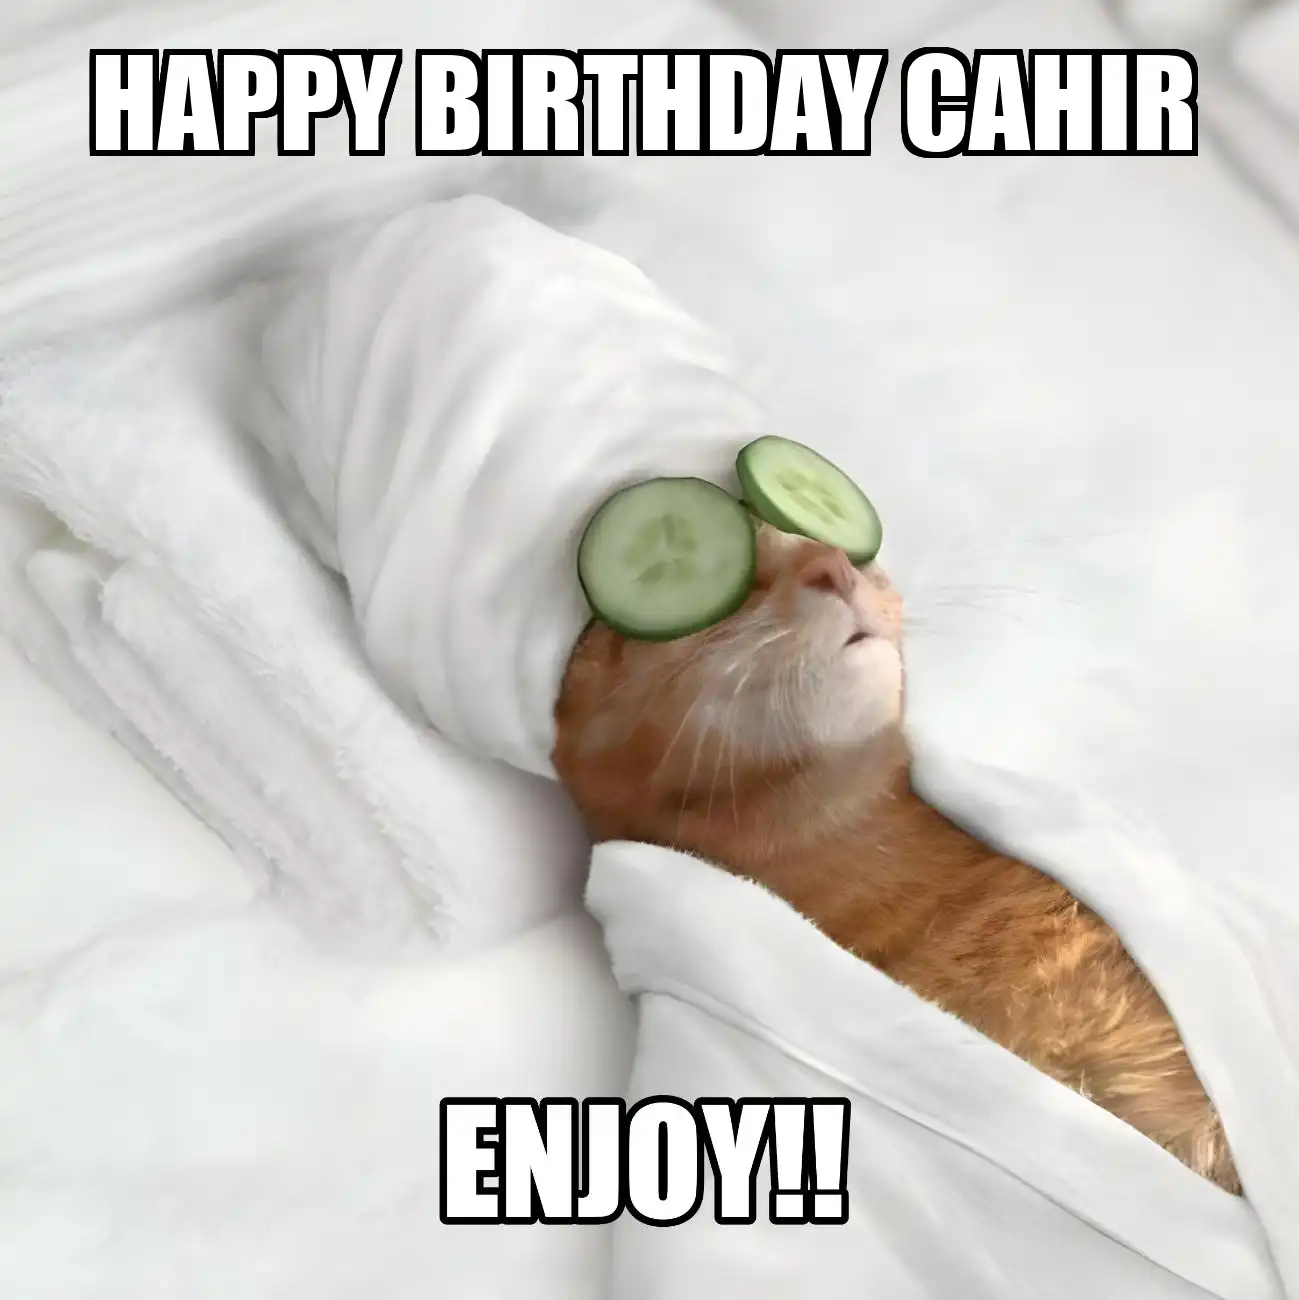 Happy Birthday Cahir Enjoy Cat Meme